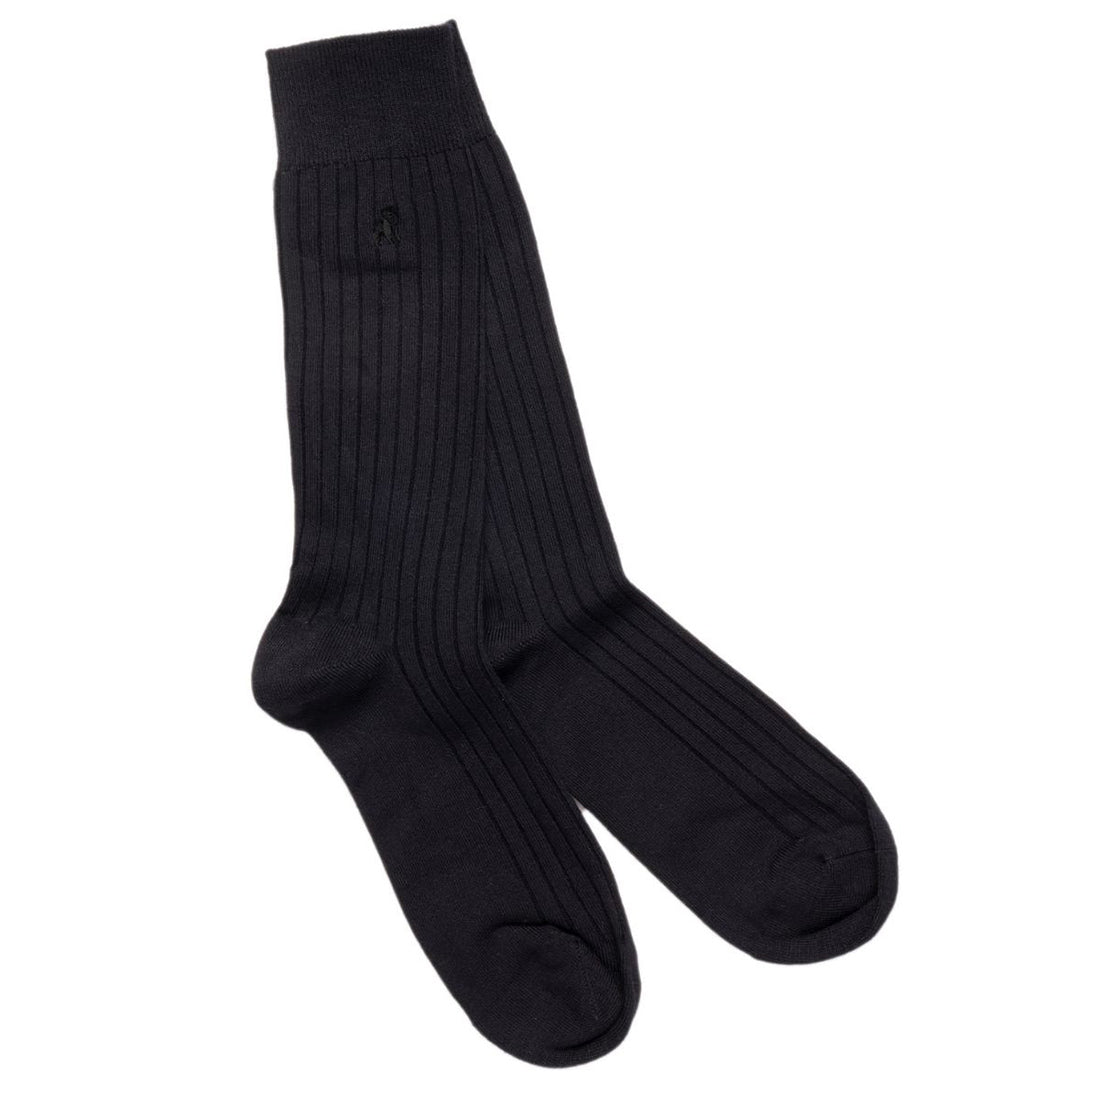 socks-navy-bamboo-socks-comfort-cuff-1.jpg